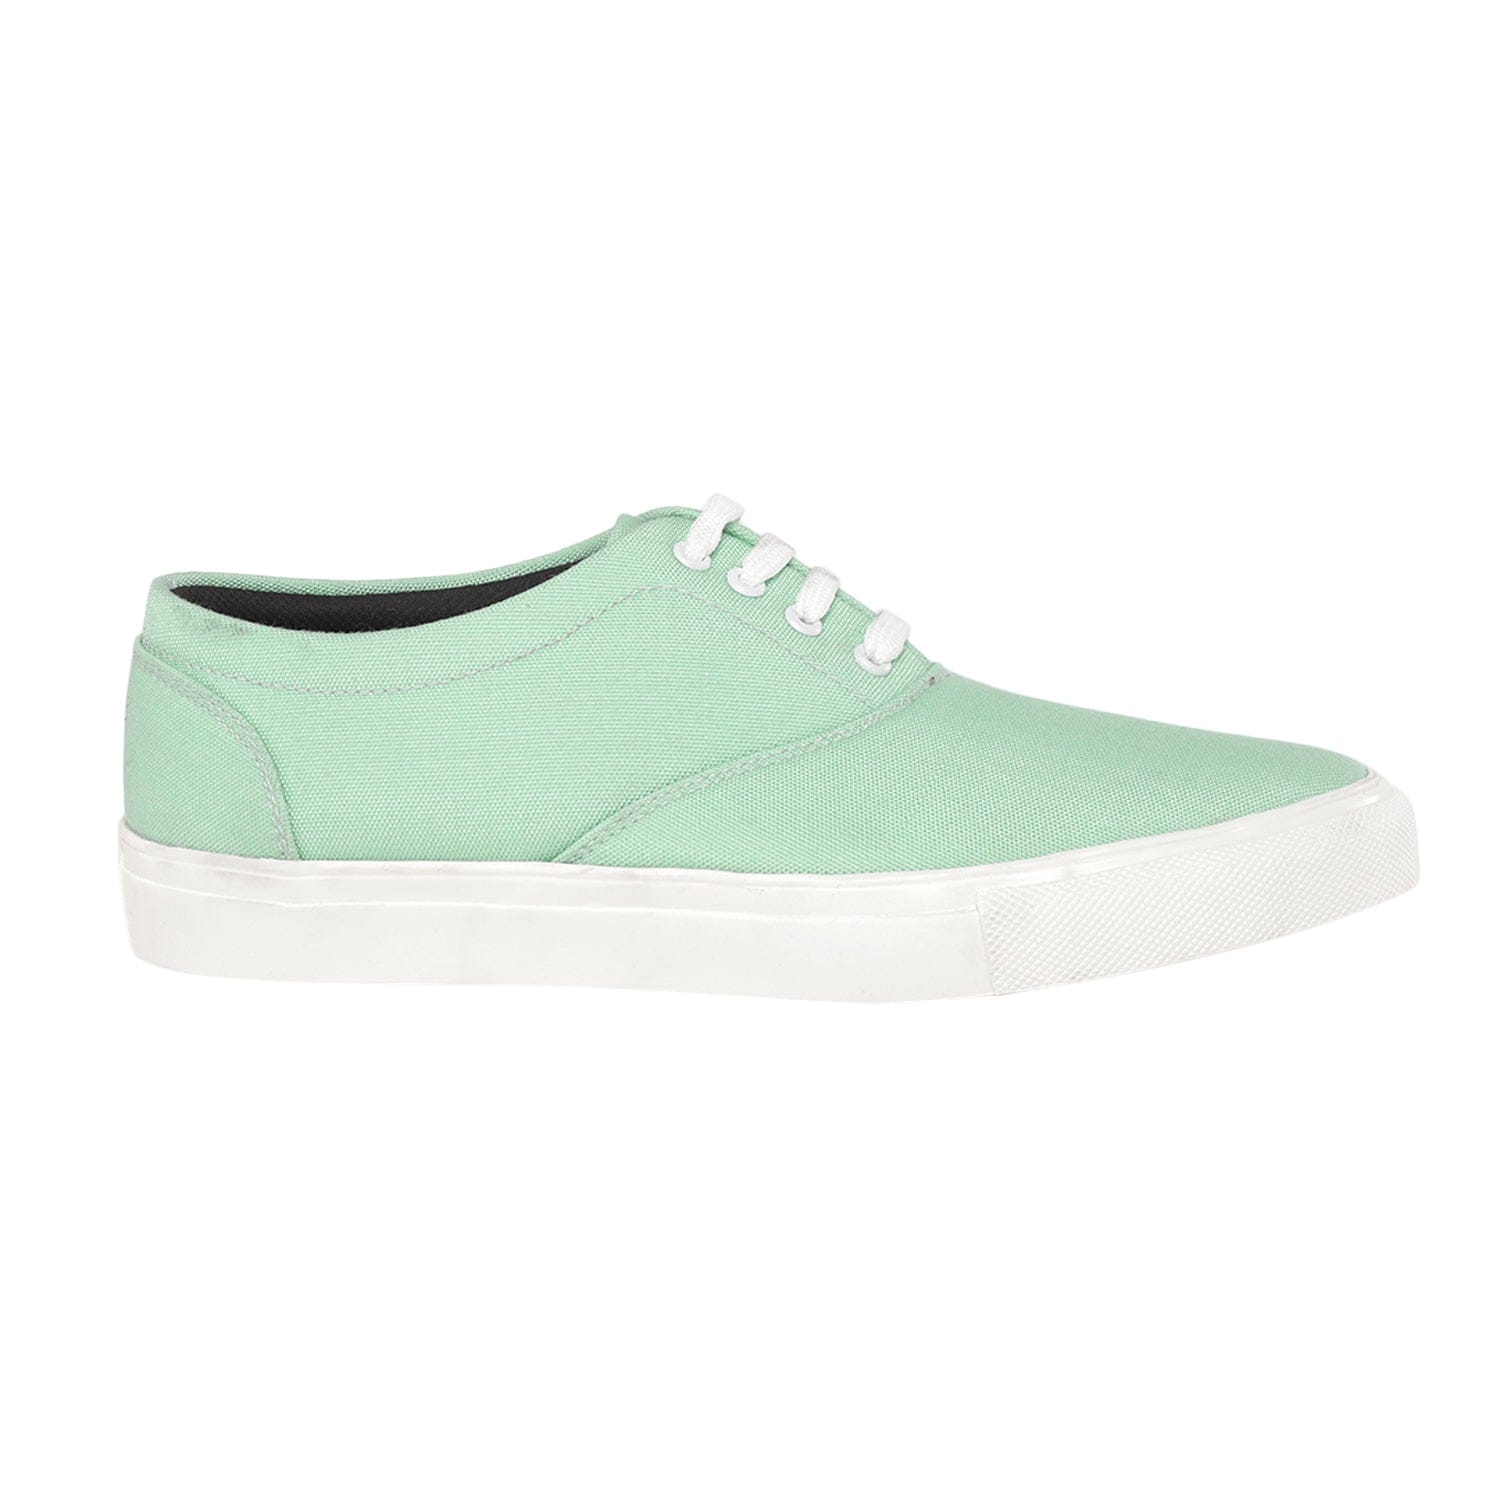 Funkfeets Unisex Mint Green Sneakers